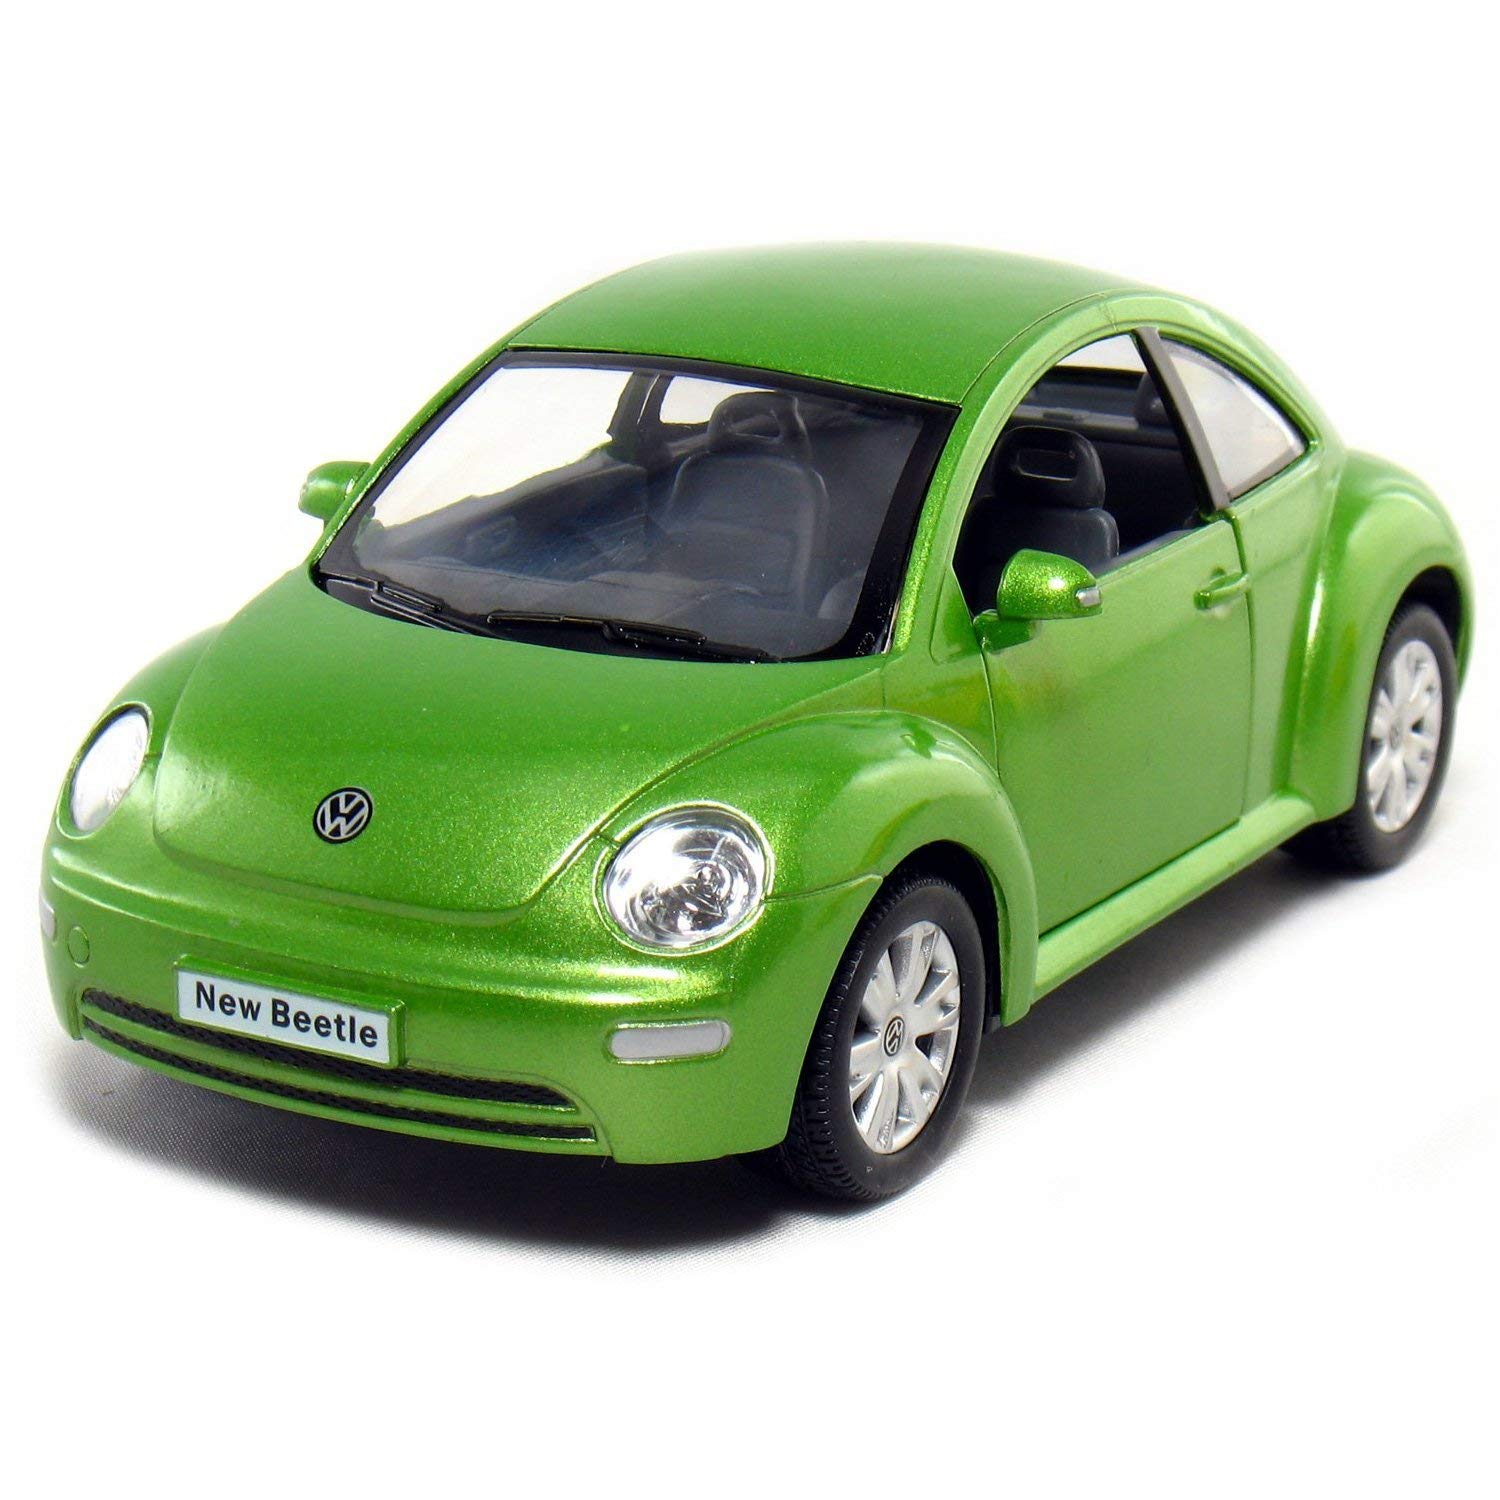 Green toy car photo